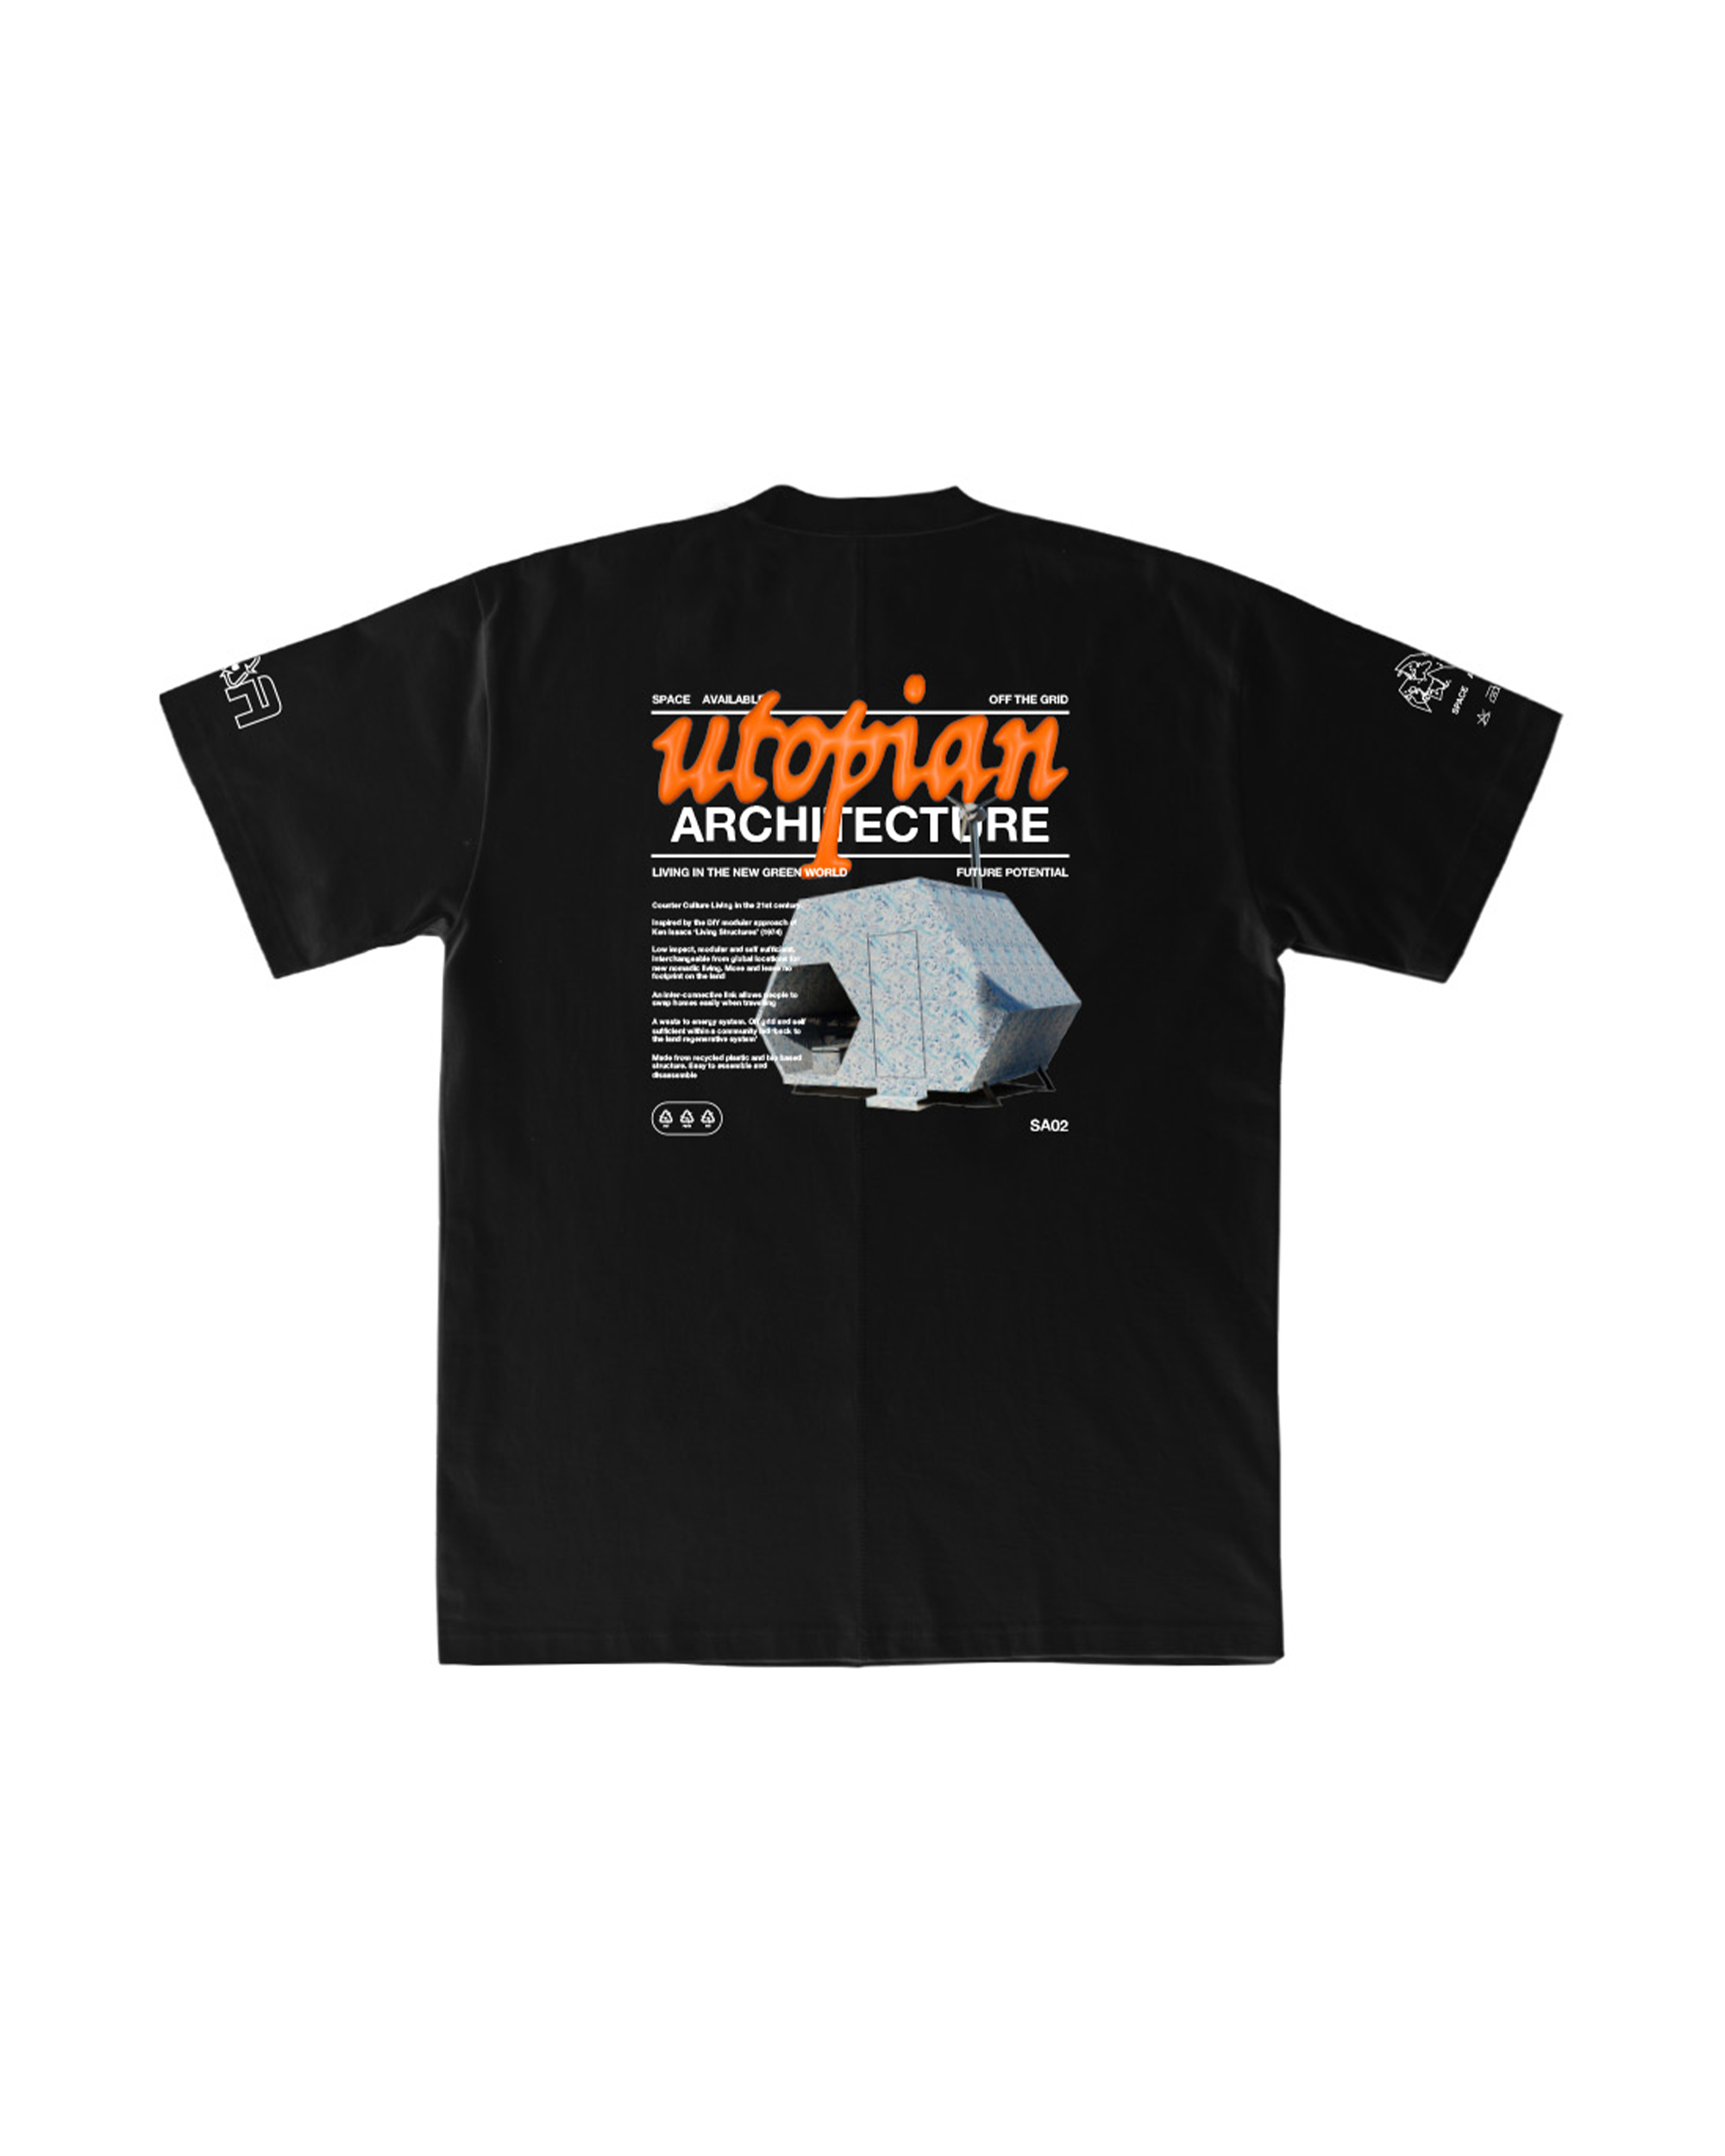 Utopian Architecture T-Shirt - Black